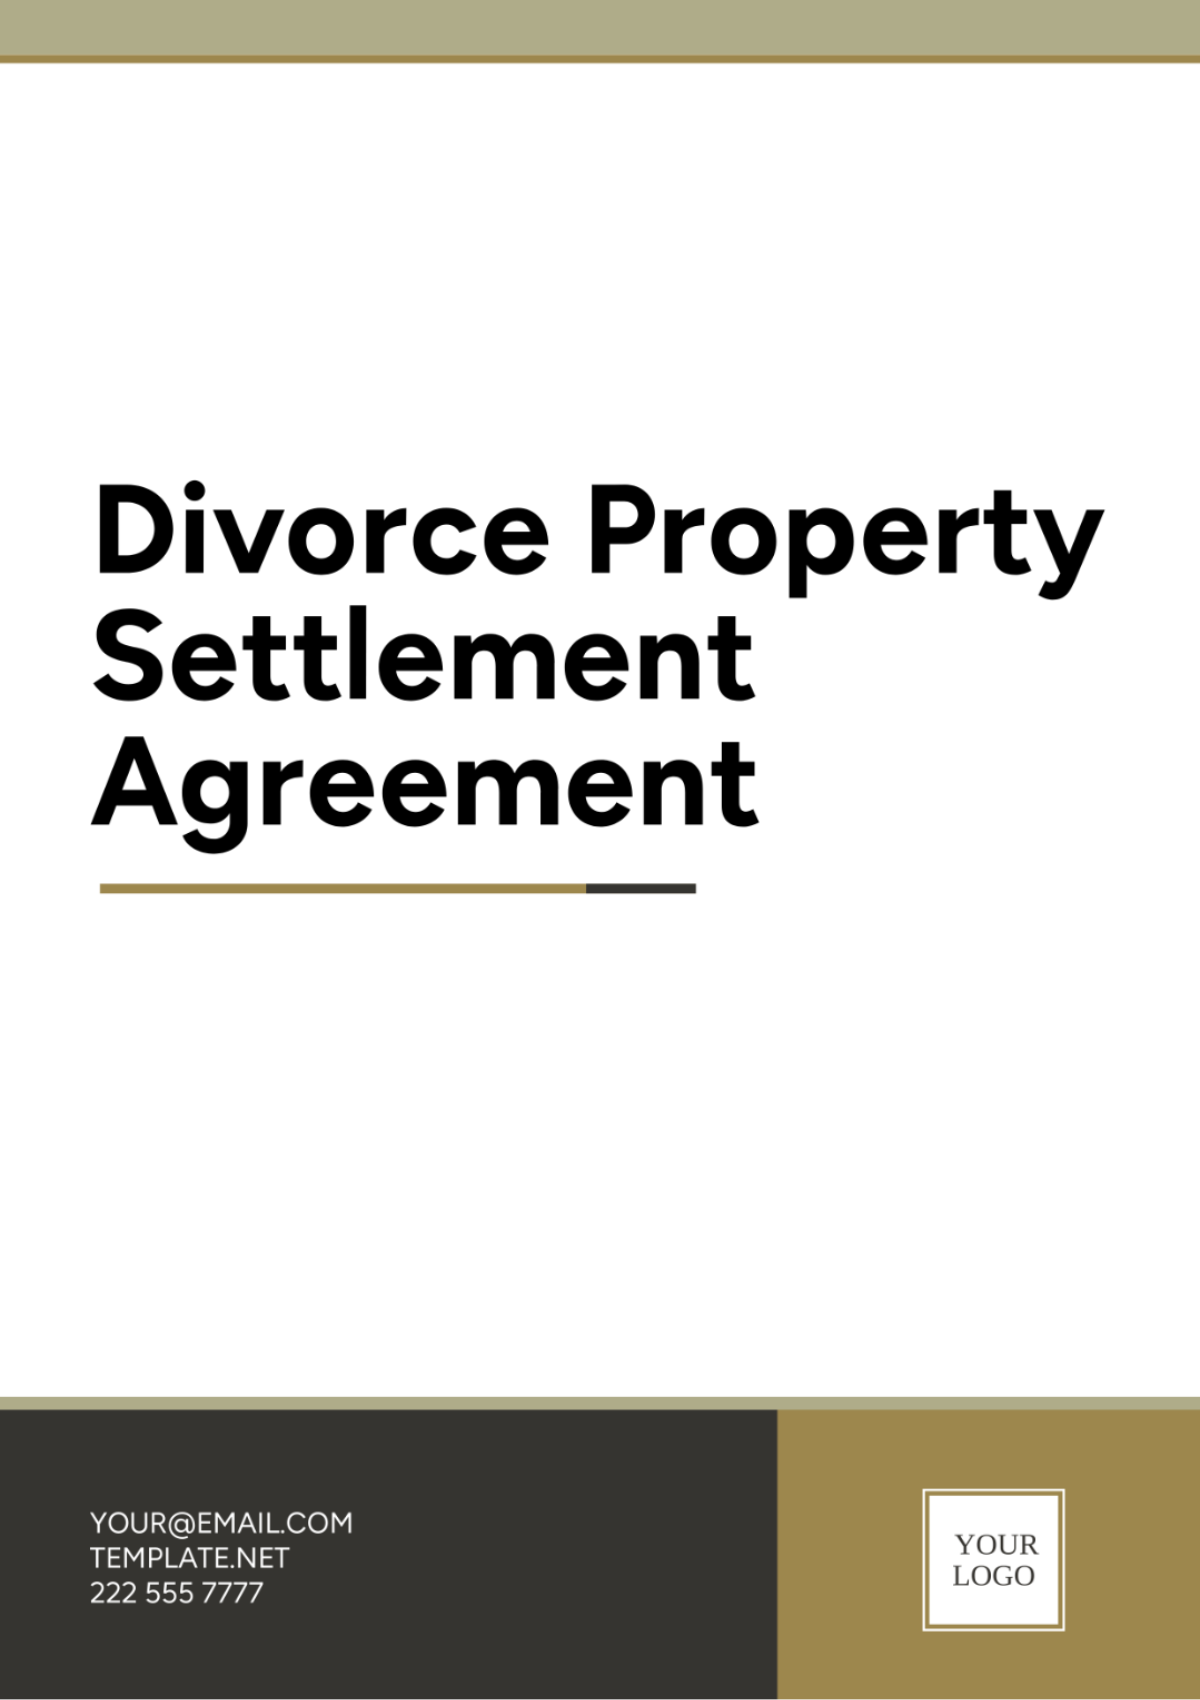 Free Divorce Property Settlement Agreement Template